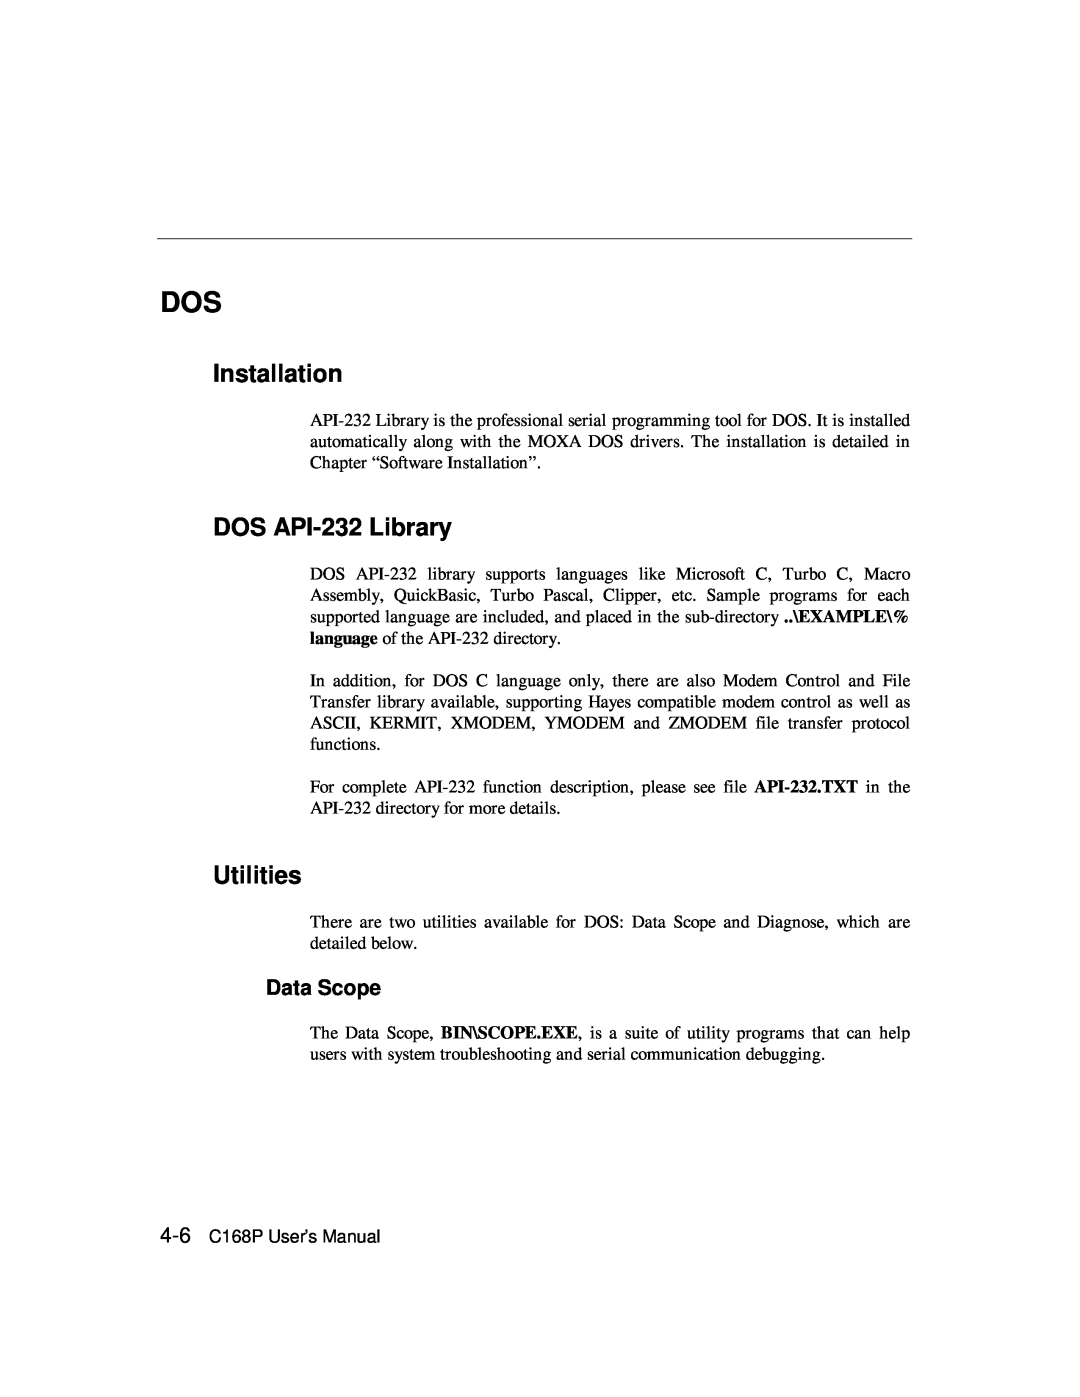 Moxa Technologies user manual DOS API-232 Library, Data Scope, Installation, Utilities, 4-6 C168P User’s Manual 